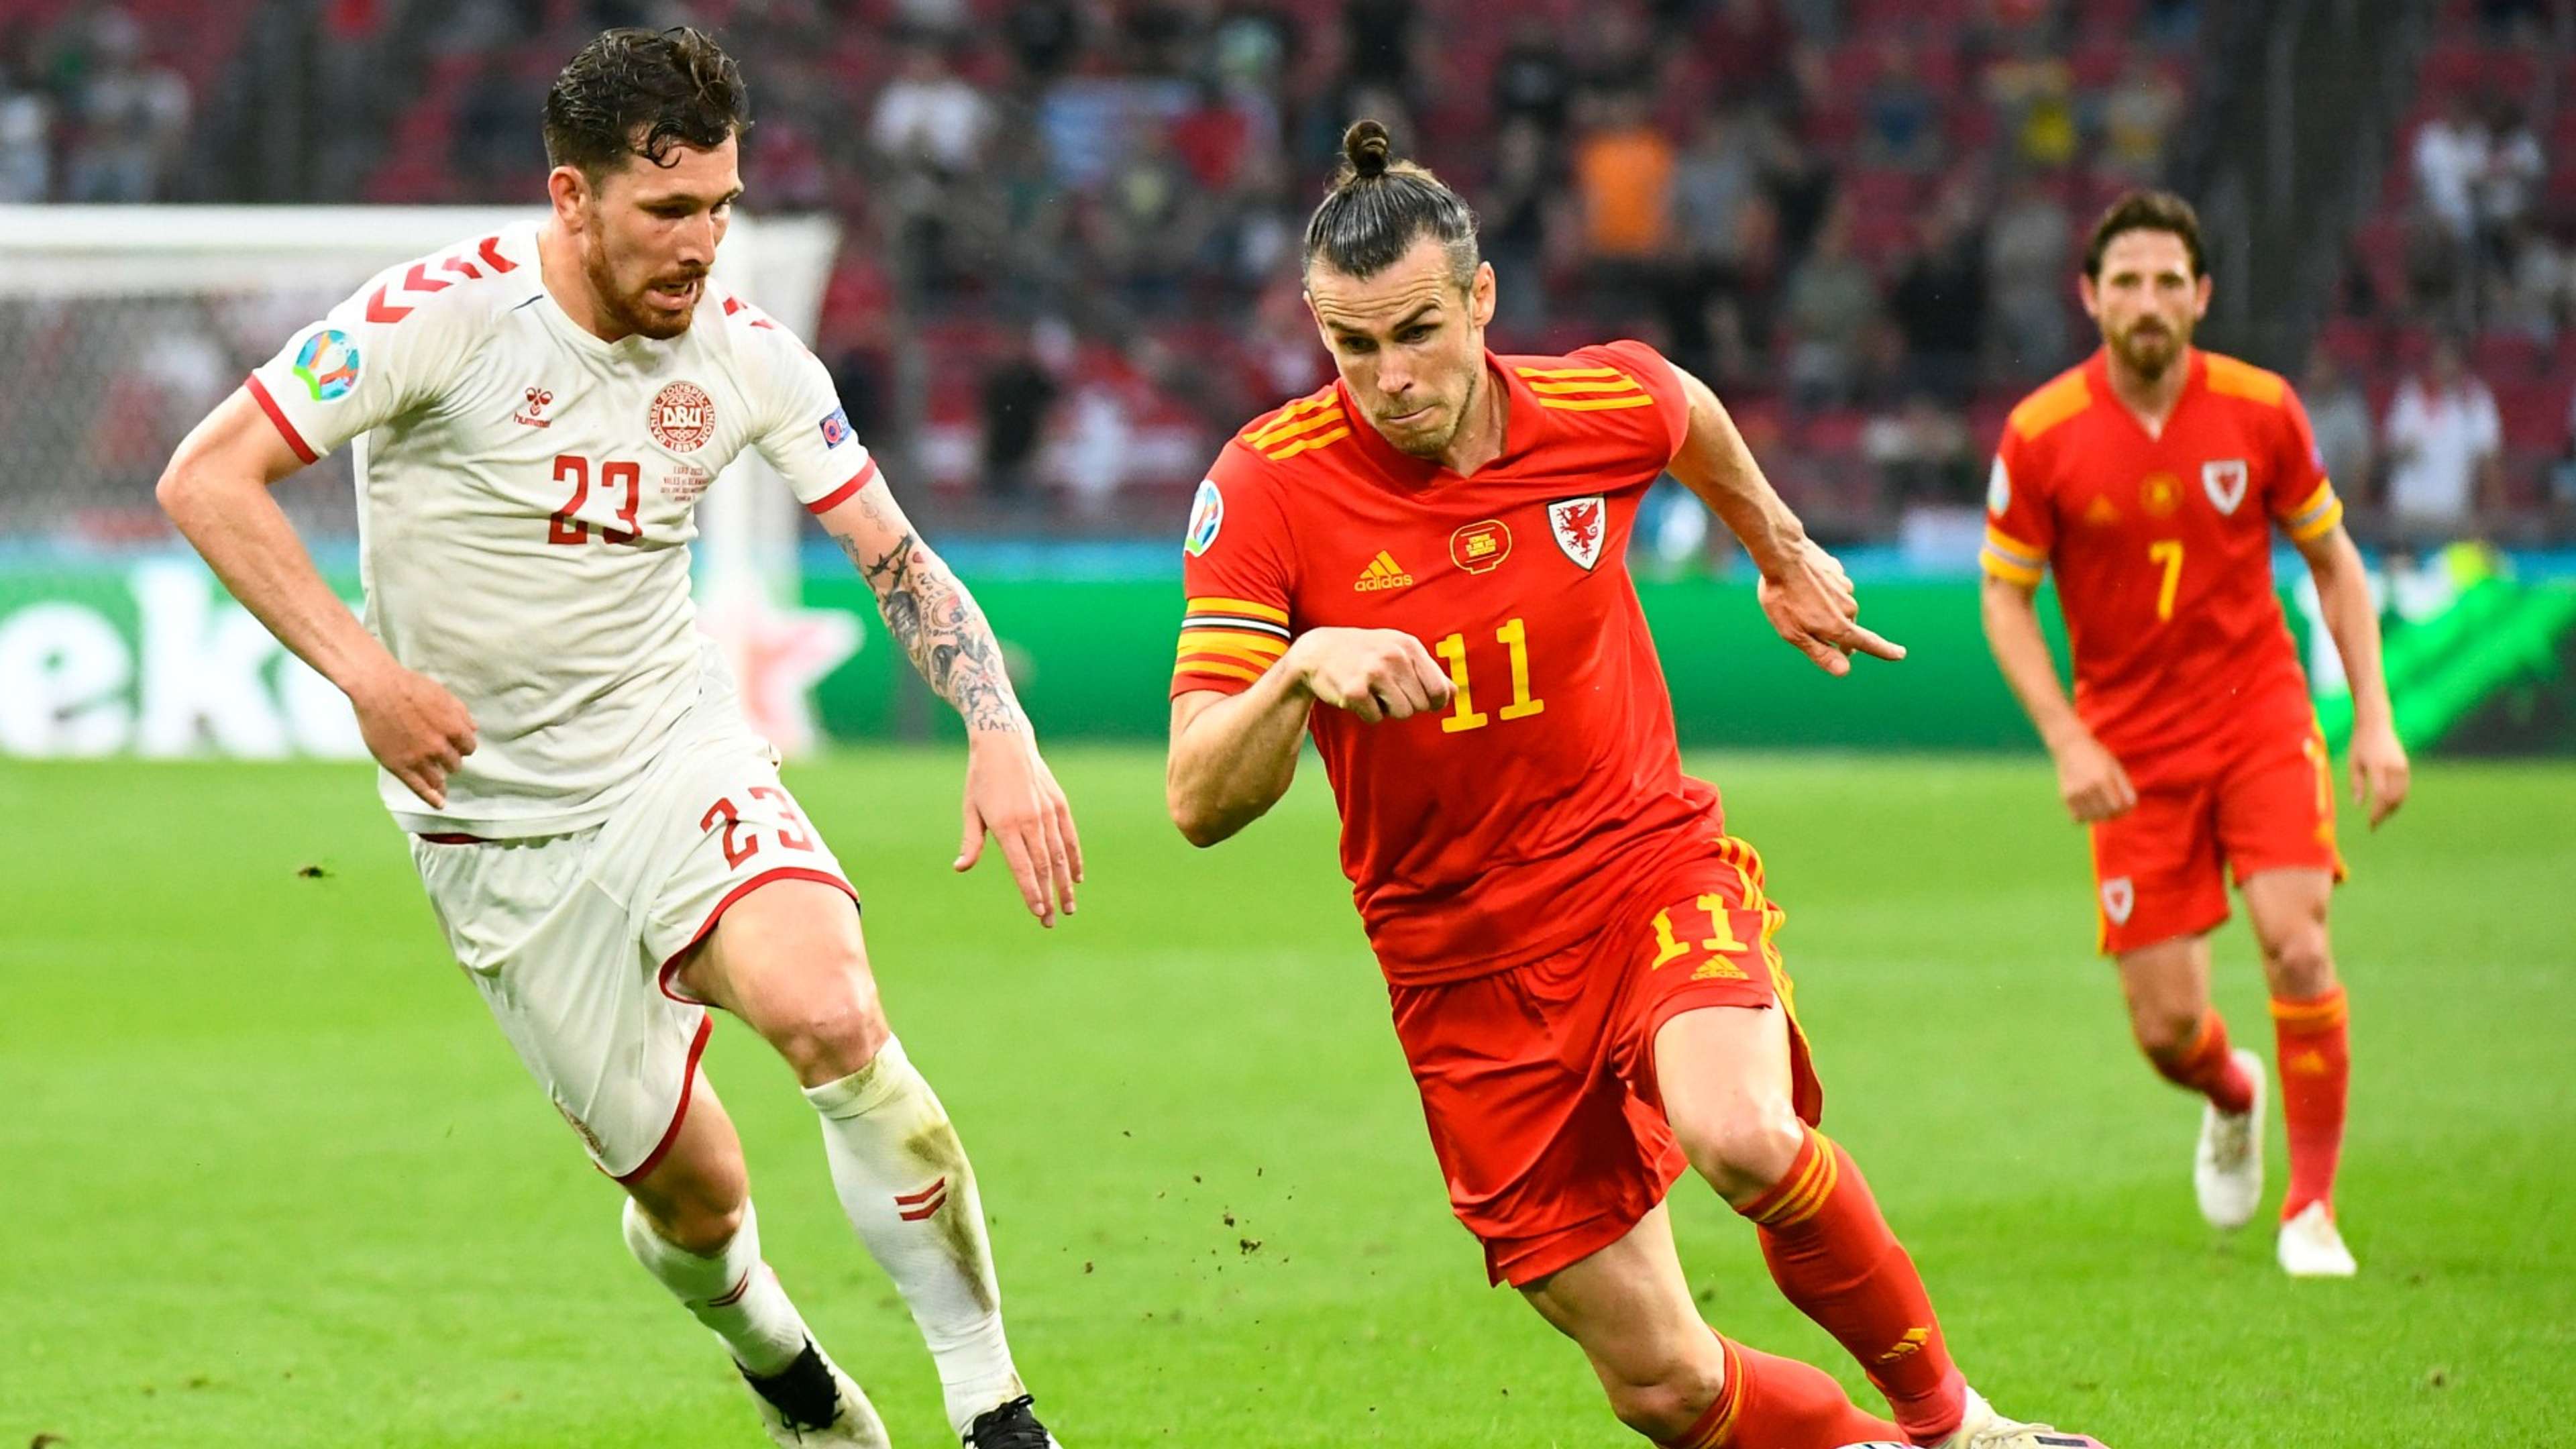 Gareth Bale Wales vs Denmark Euro 2020